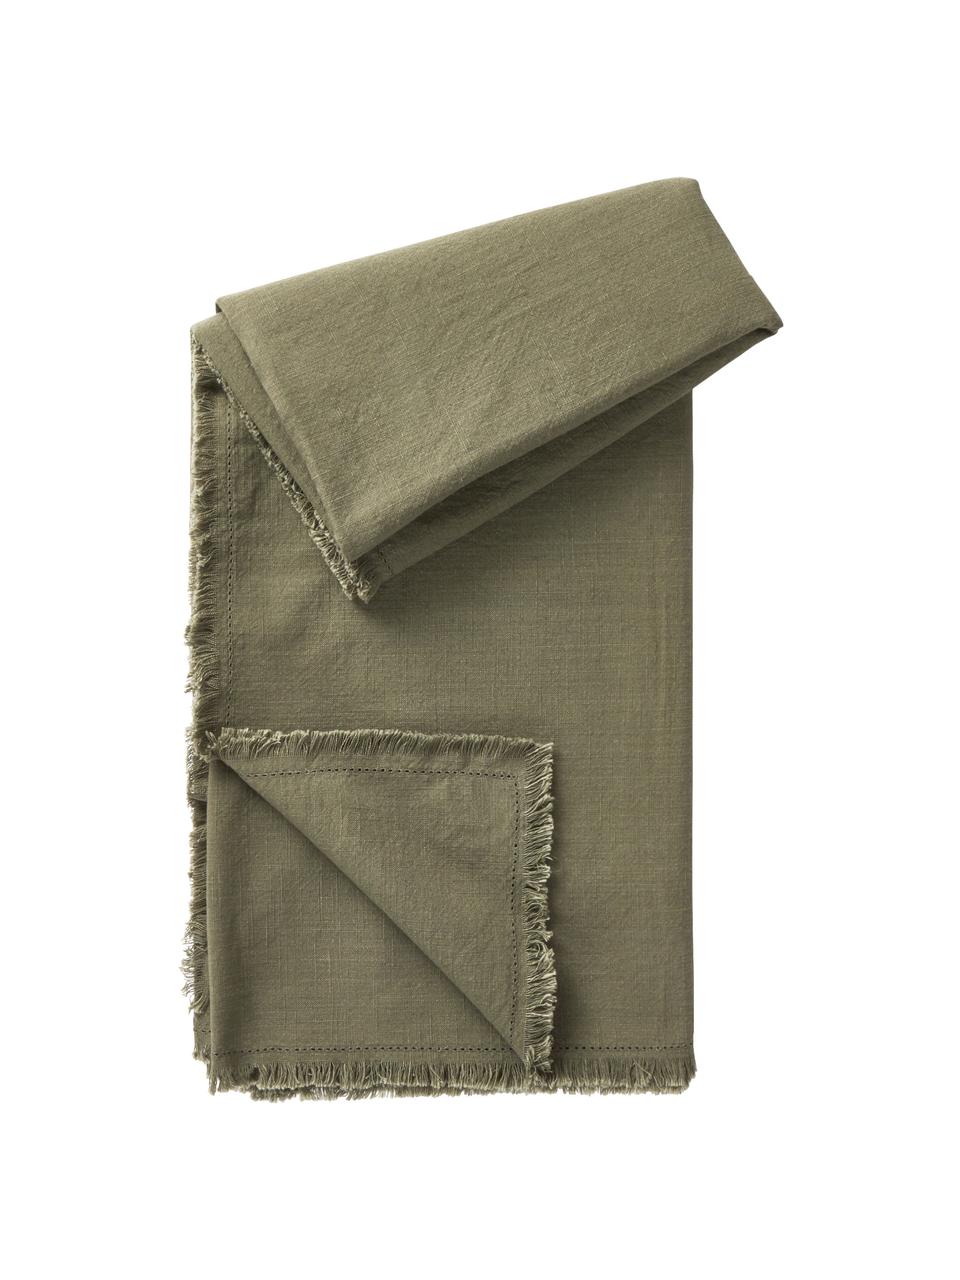 Mantel de algodón con flecos Henley, 100% algodón, Verde oliva, De 4 a 6 comensales (An 145 x L 200 cm)